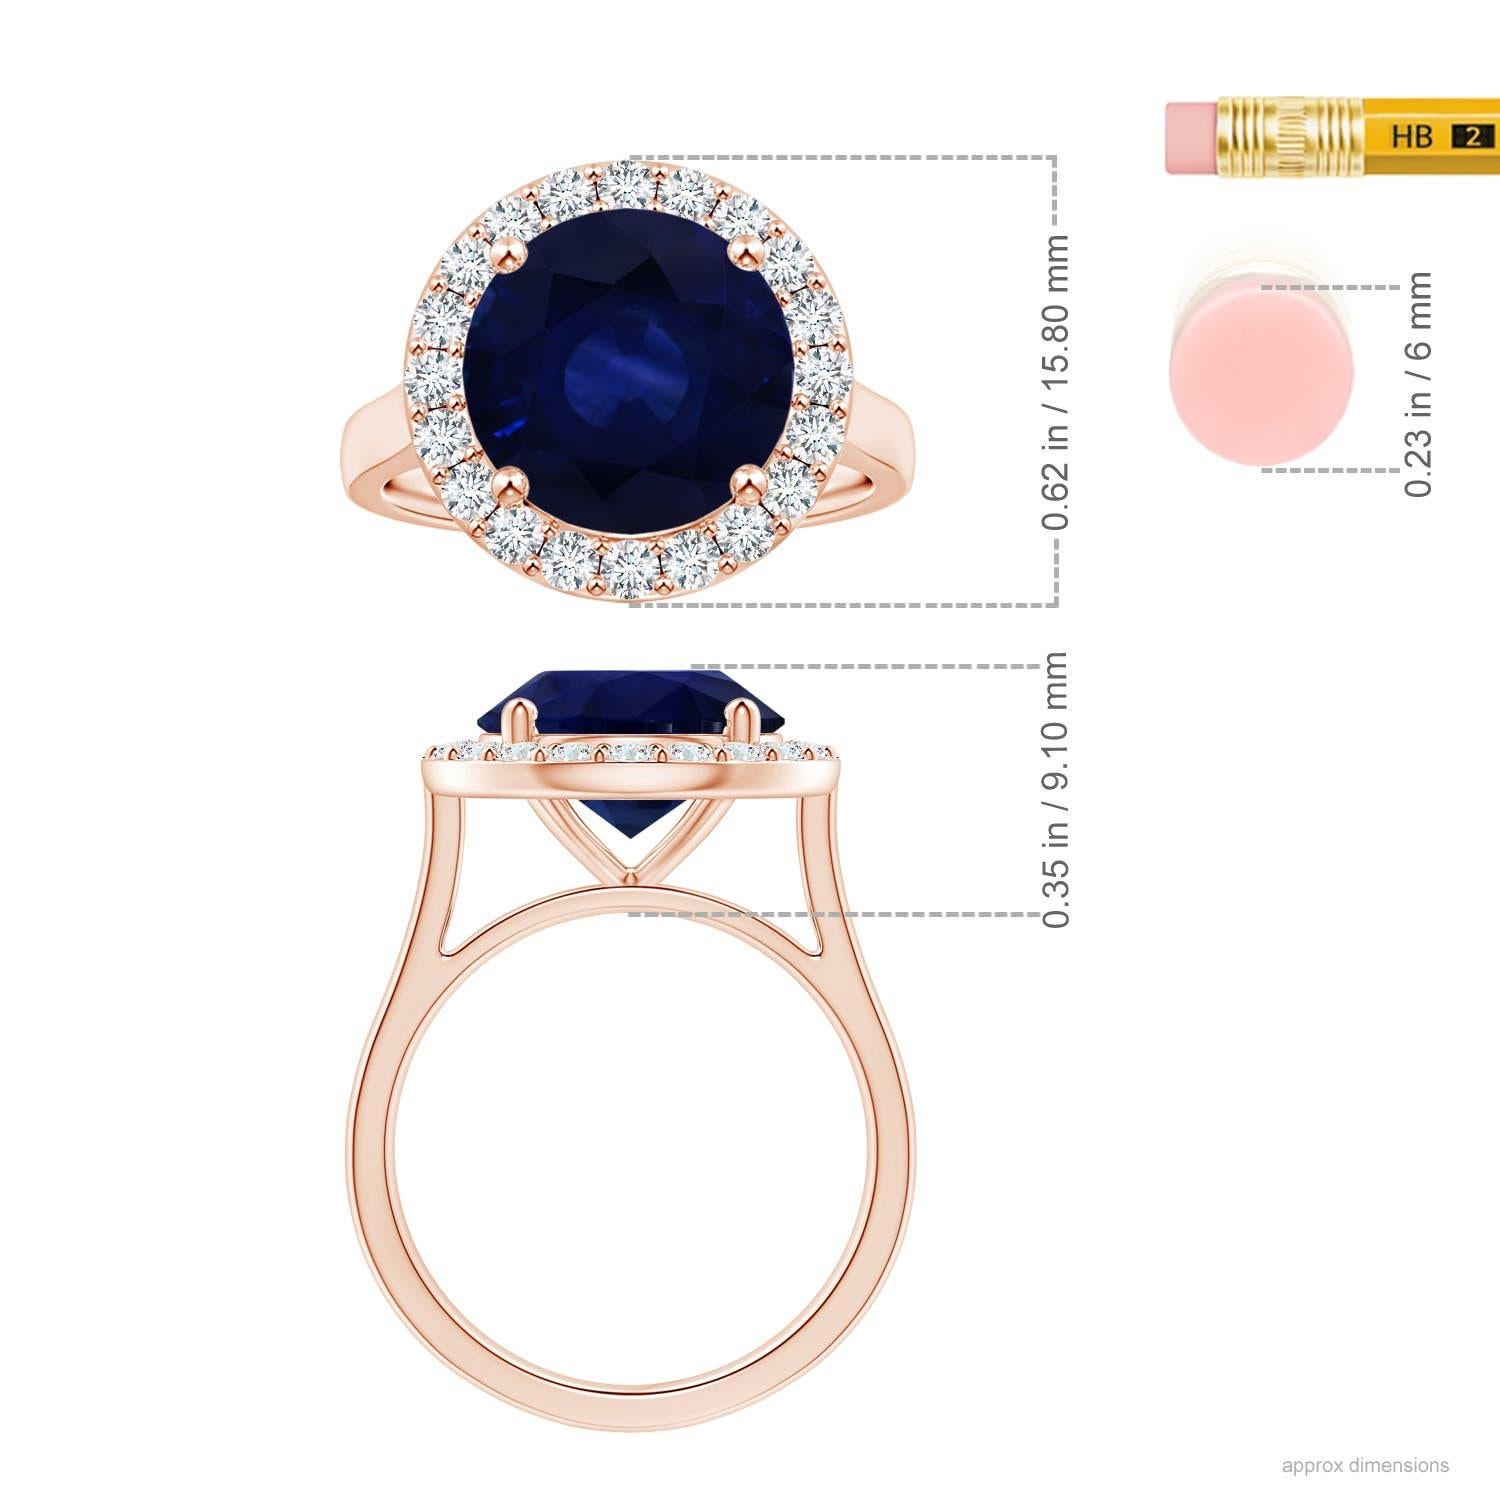 En vente :  ANGARA Bague en or rose avec saphir bleu naturel certifié GIA de 6,63 carats et diamants 2